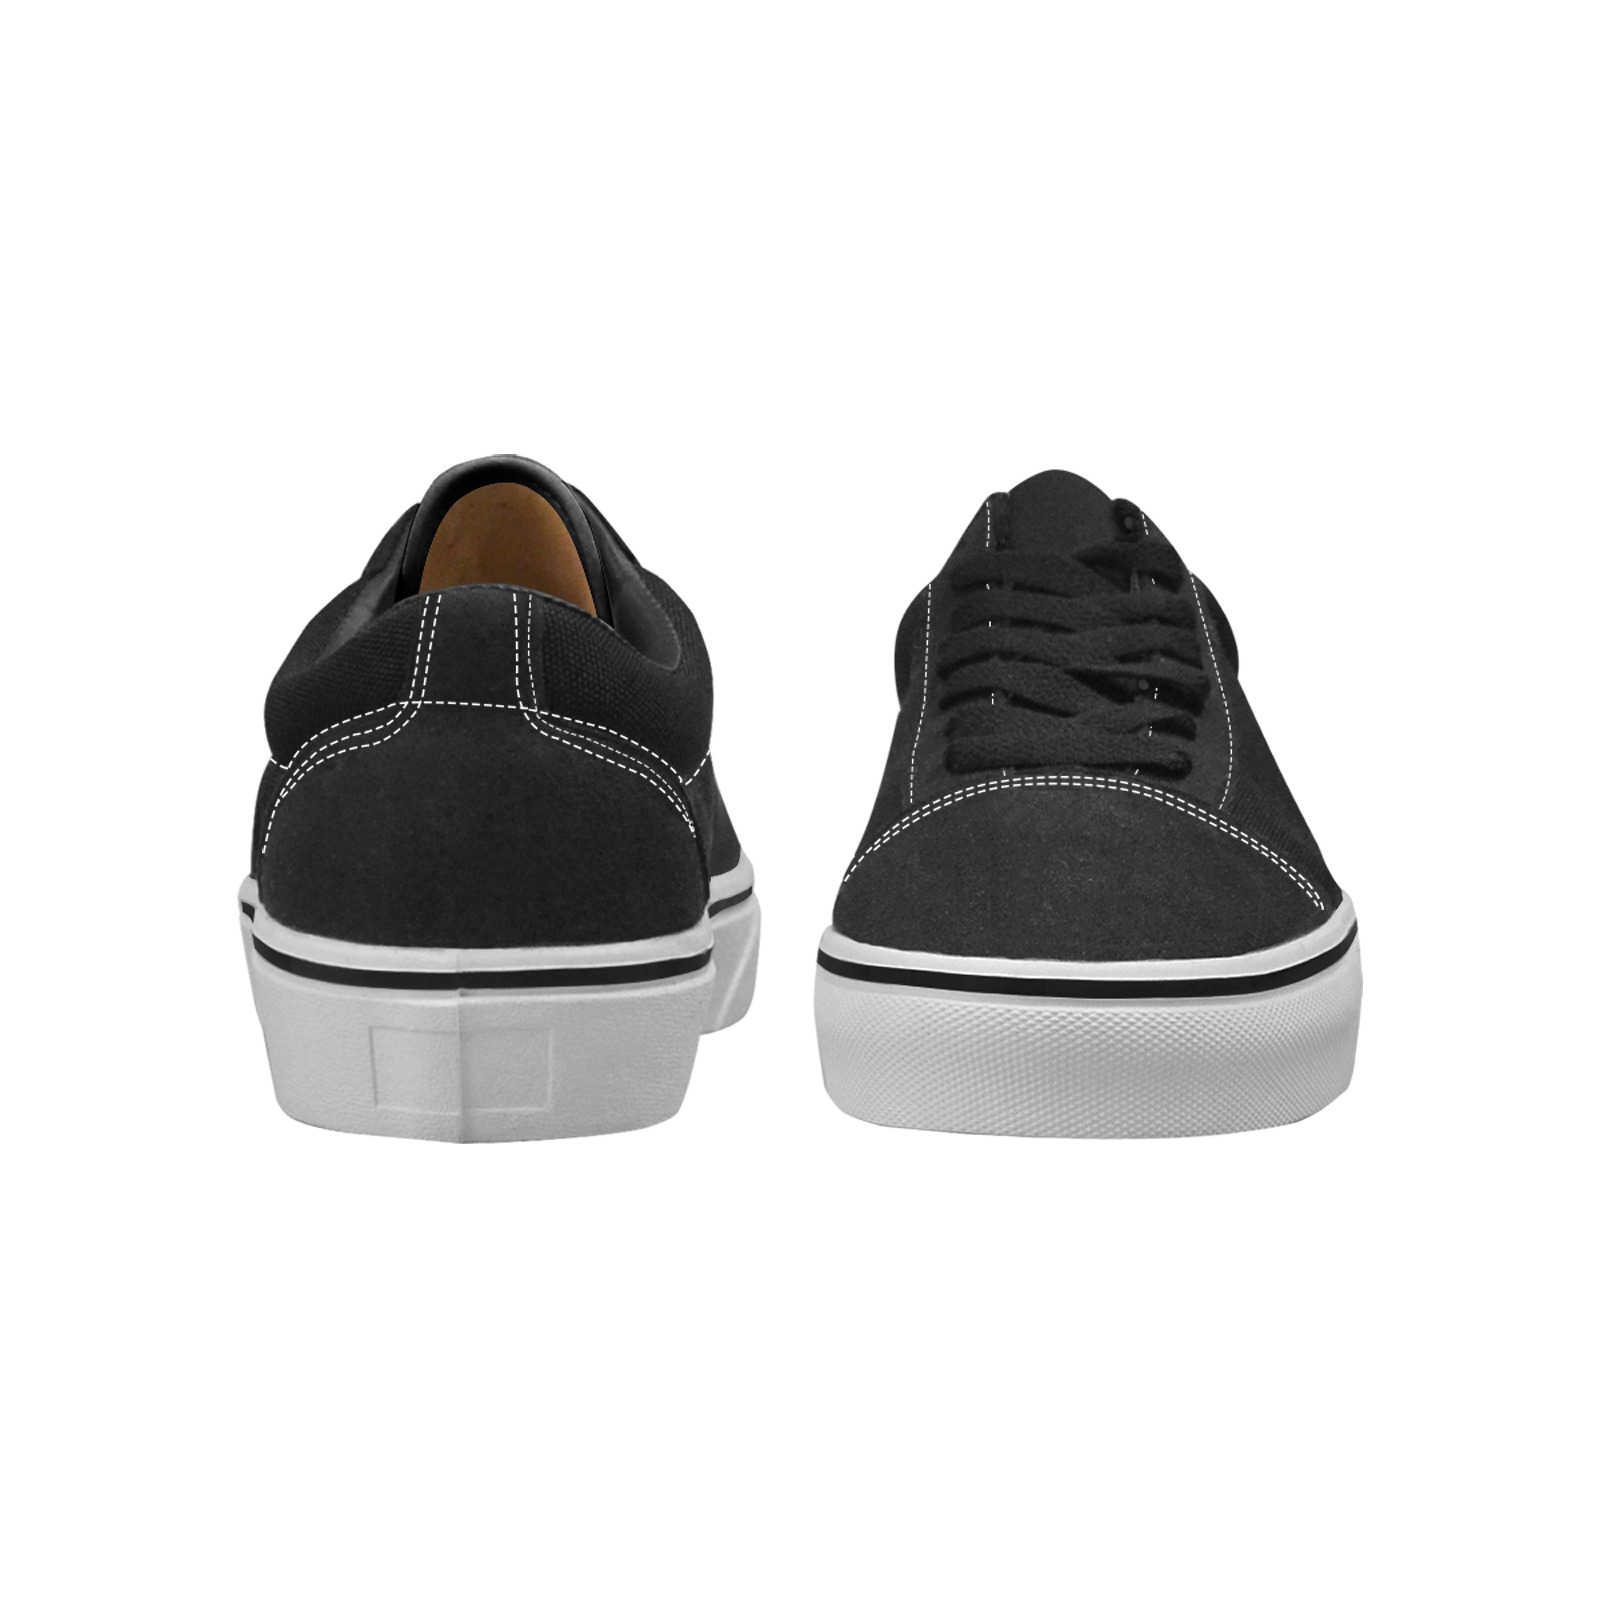 color black Women's Low Top Skateboarding Shoes (Model E001-2)